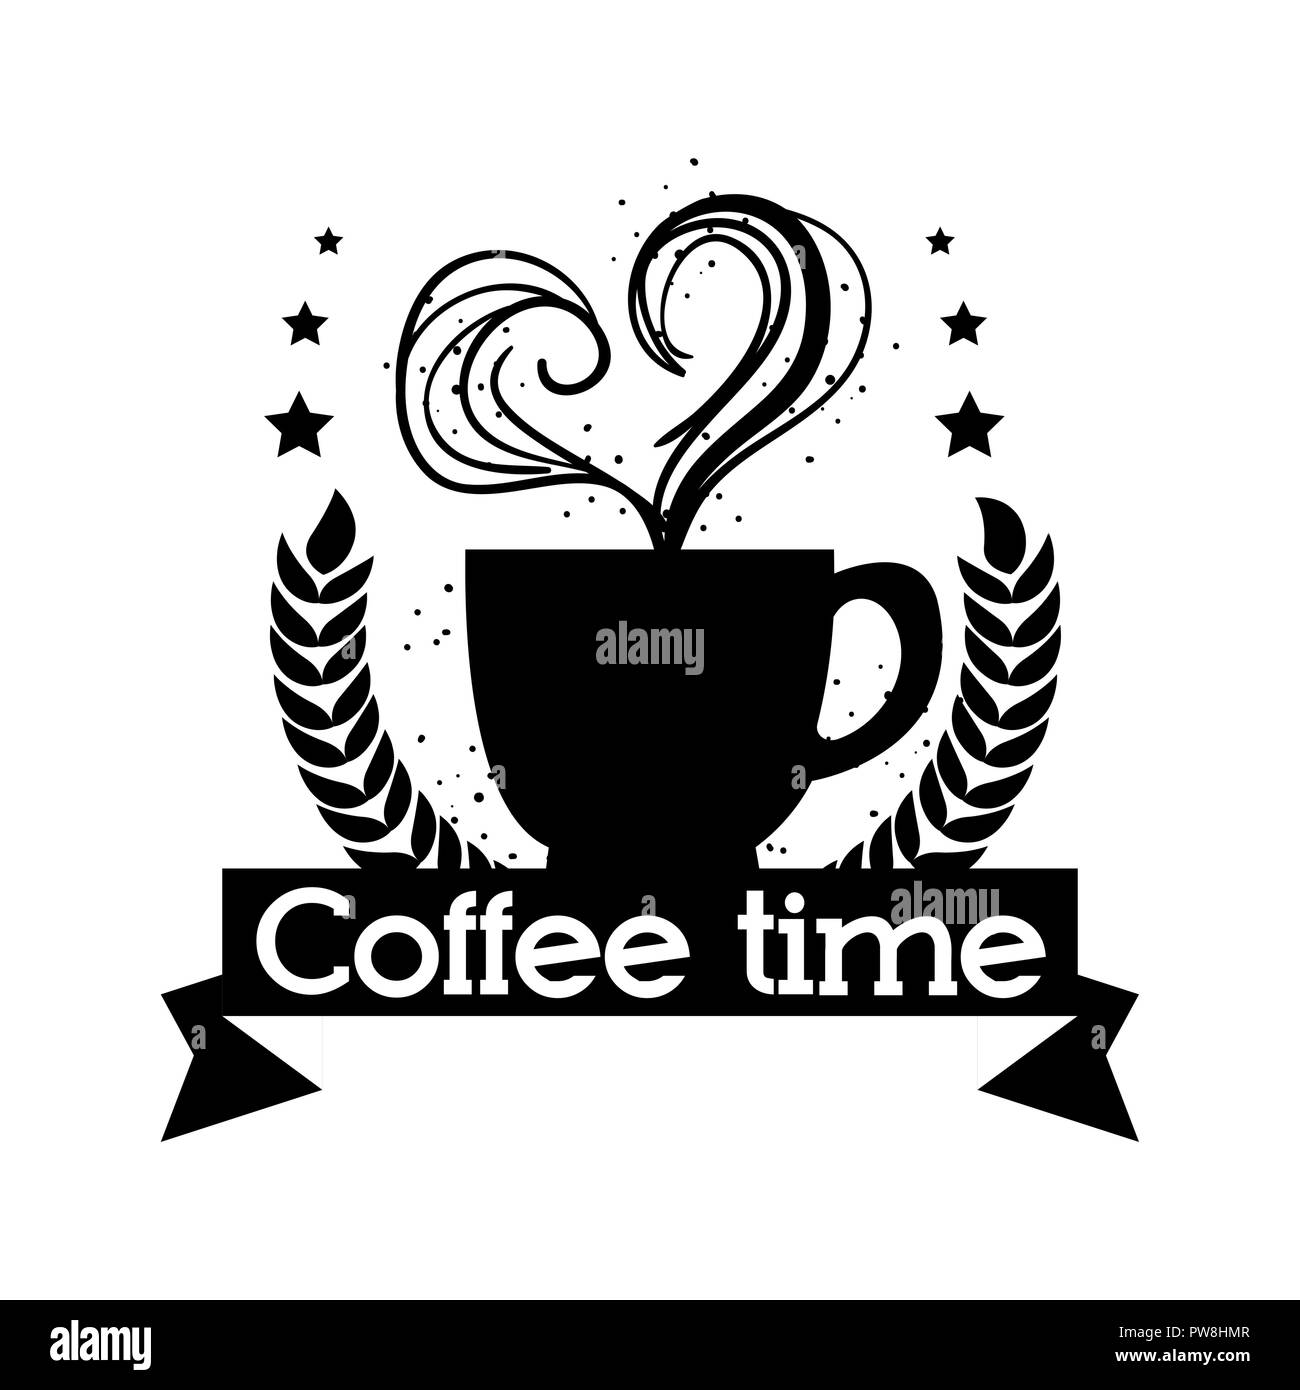 It s Coffee time картинки вектор.